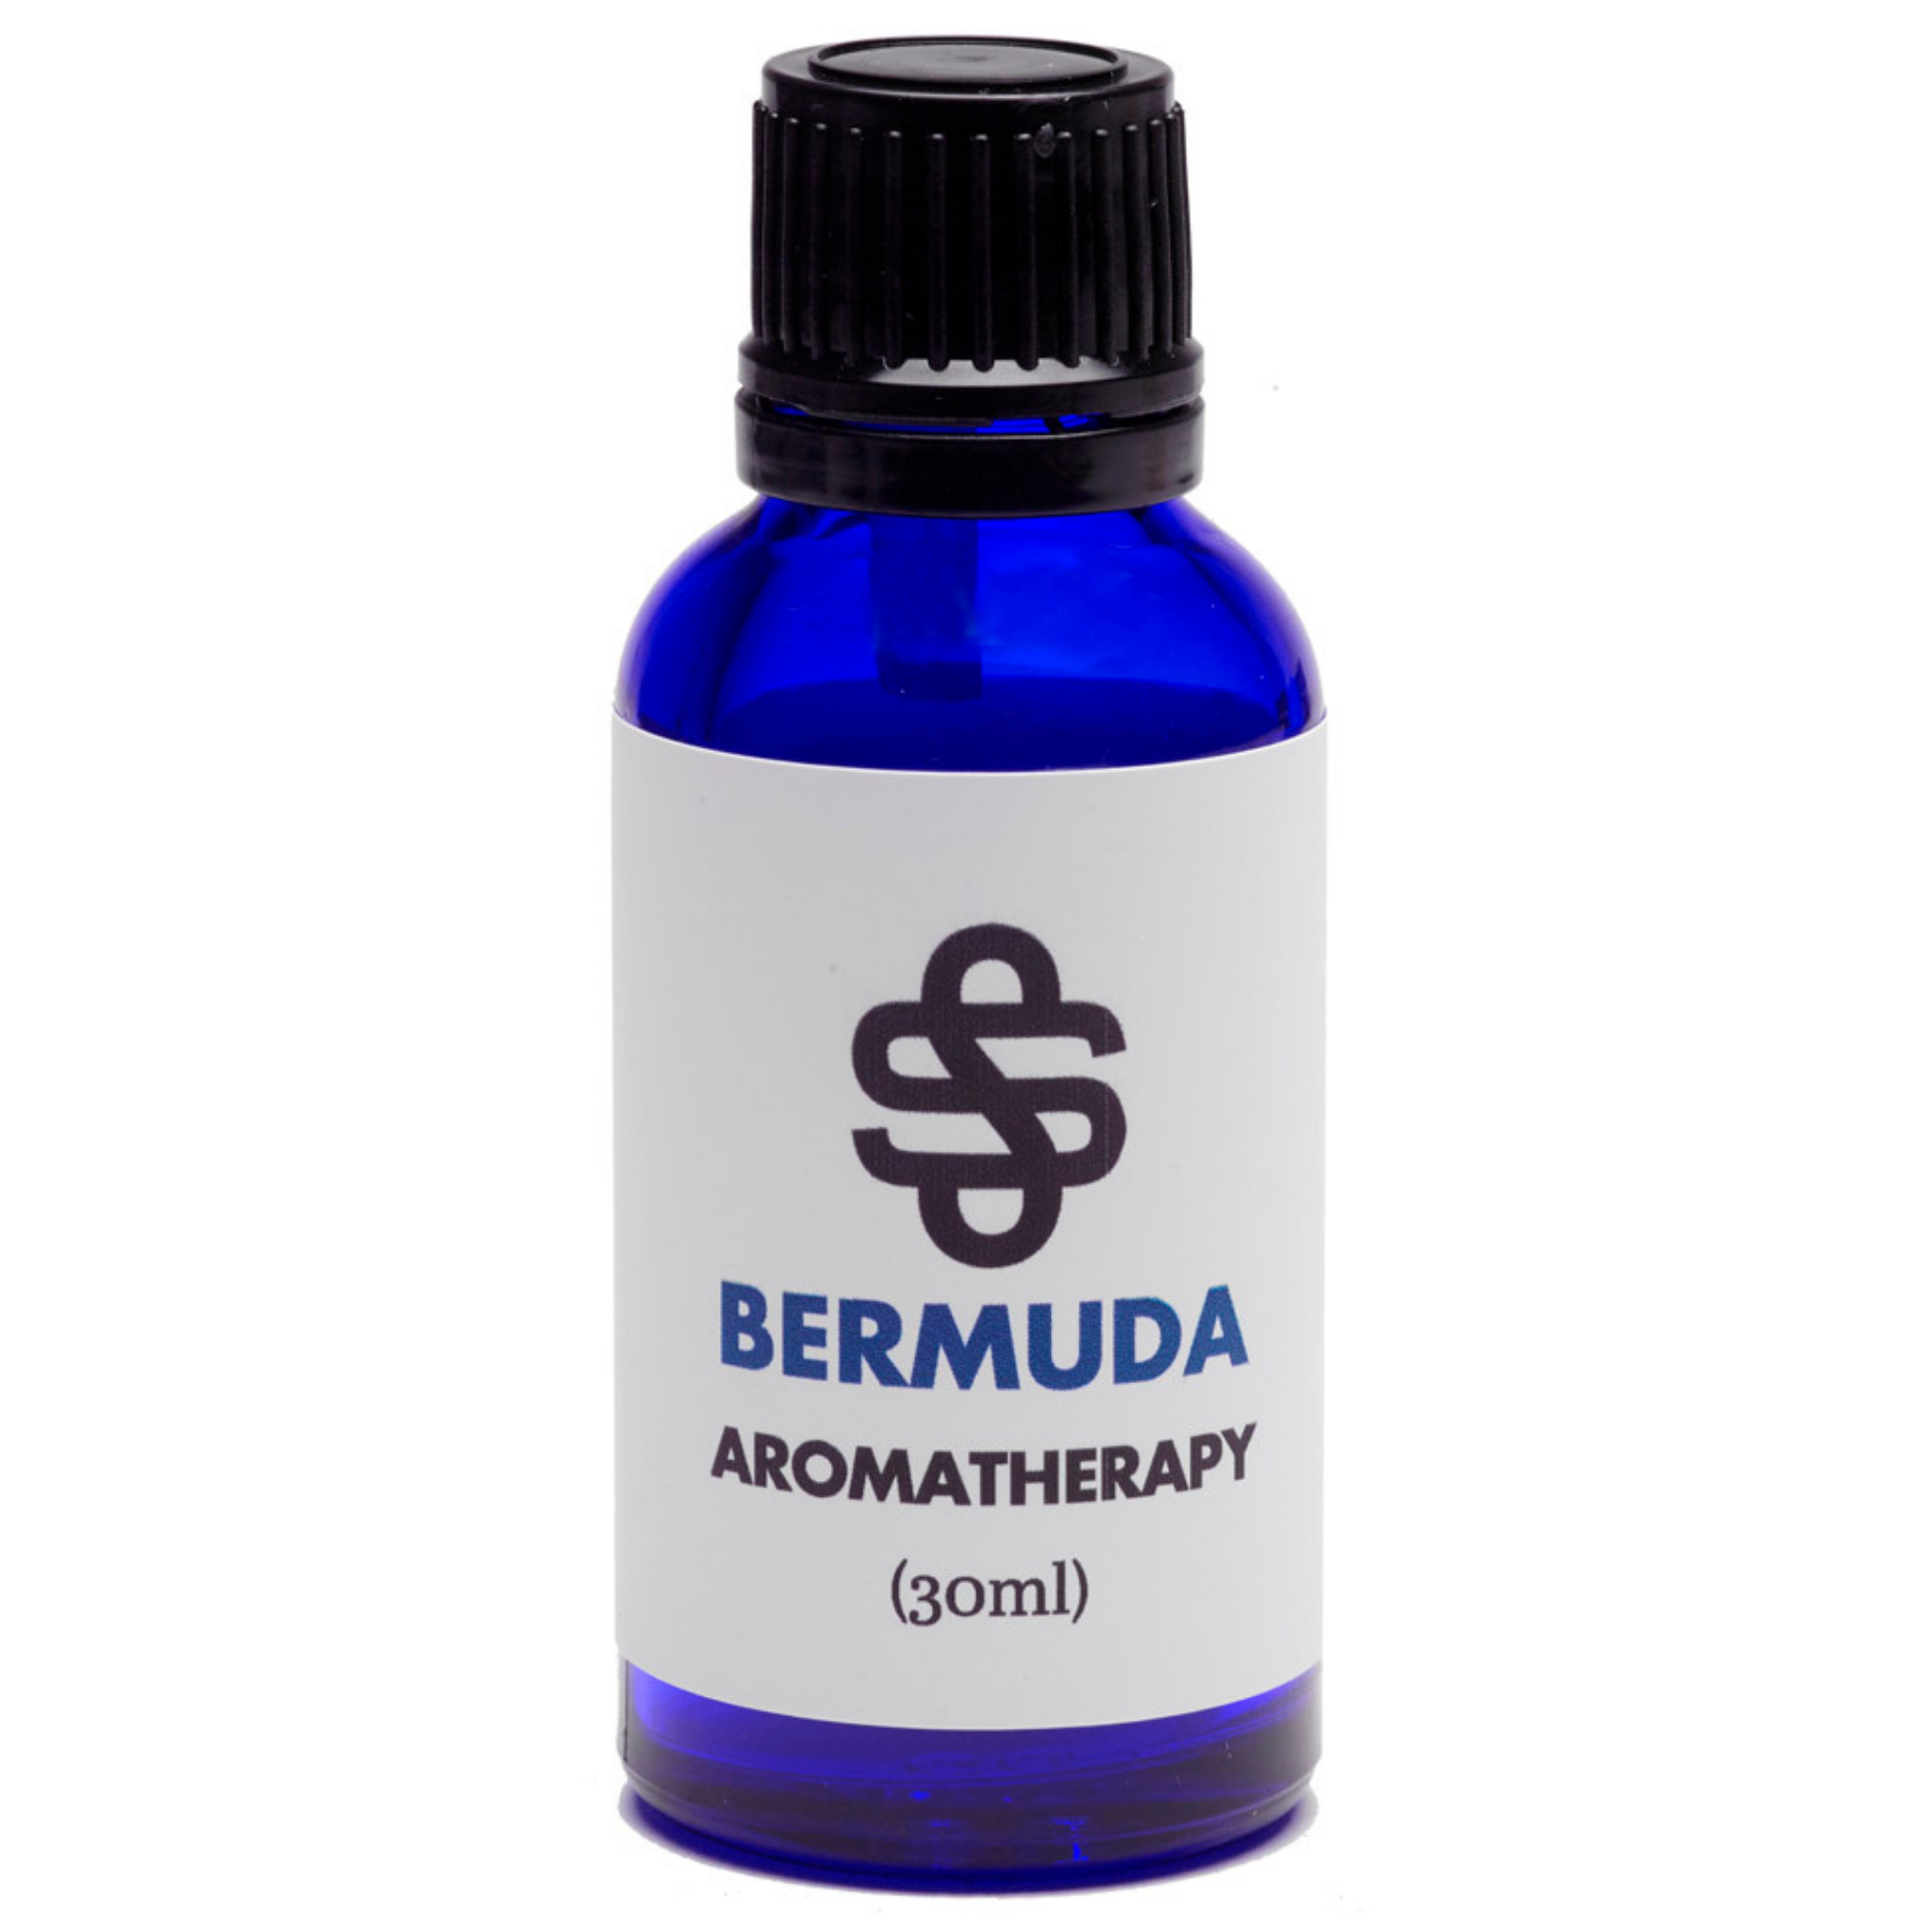 Bermuda Aromatherapy Blend